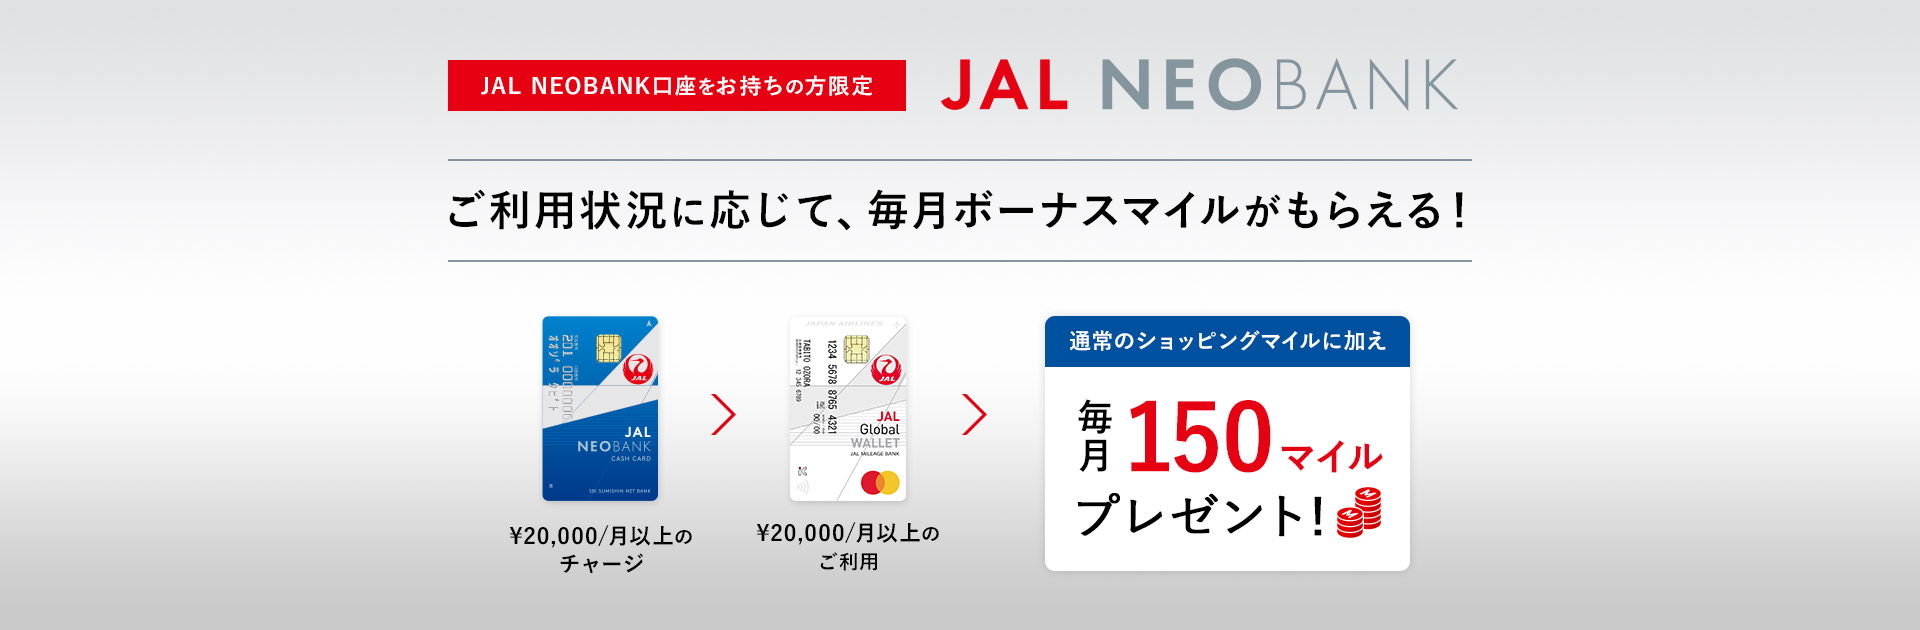 【JAL NEOBANK口座をお持ちの方限定】ご利用状況に応じて、毎月ボーナスマイルがもらえる！毎月、2万円以上のチャージ&利用で通常のショッピングマイルに加え毎月150マイルプレゼント！